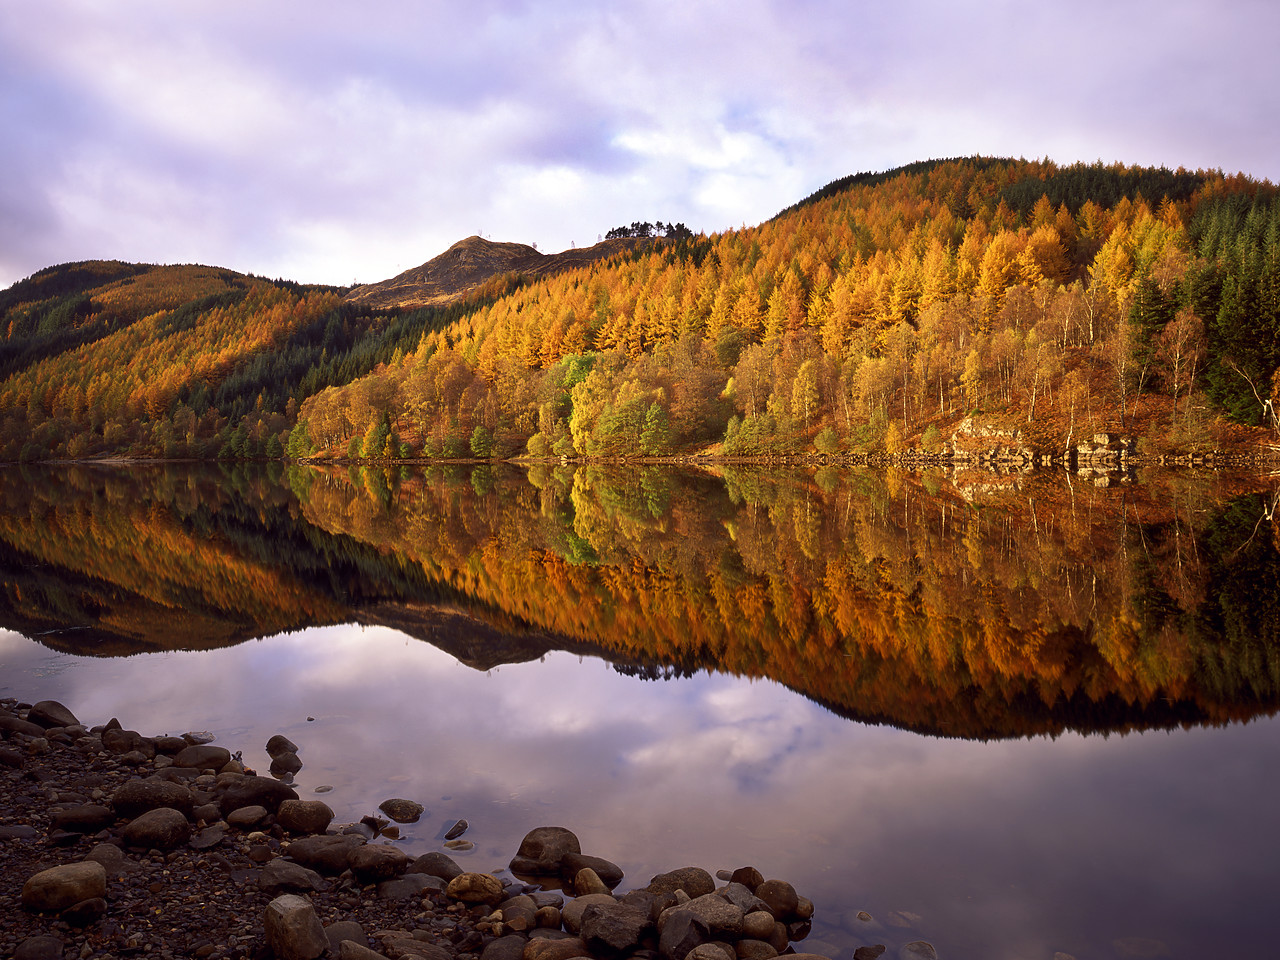 #970500-2 - Loch Faskally Reflections in Autumn, near Pitlochry, Tayside Region, Scotland